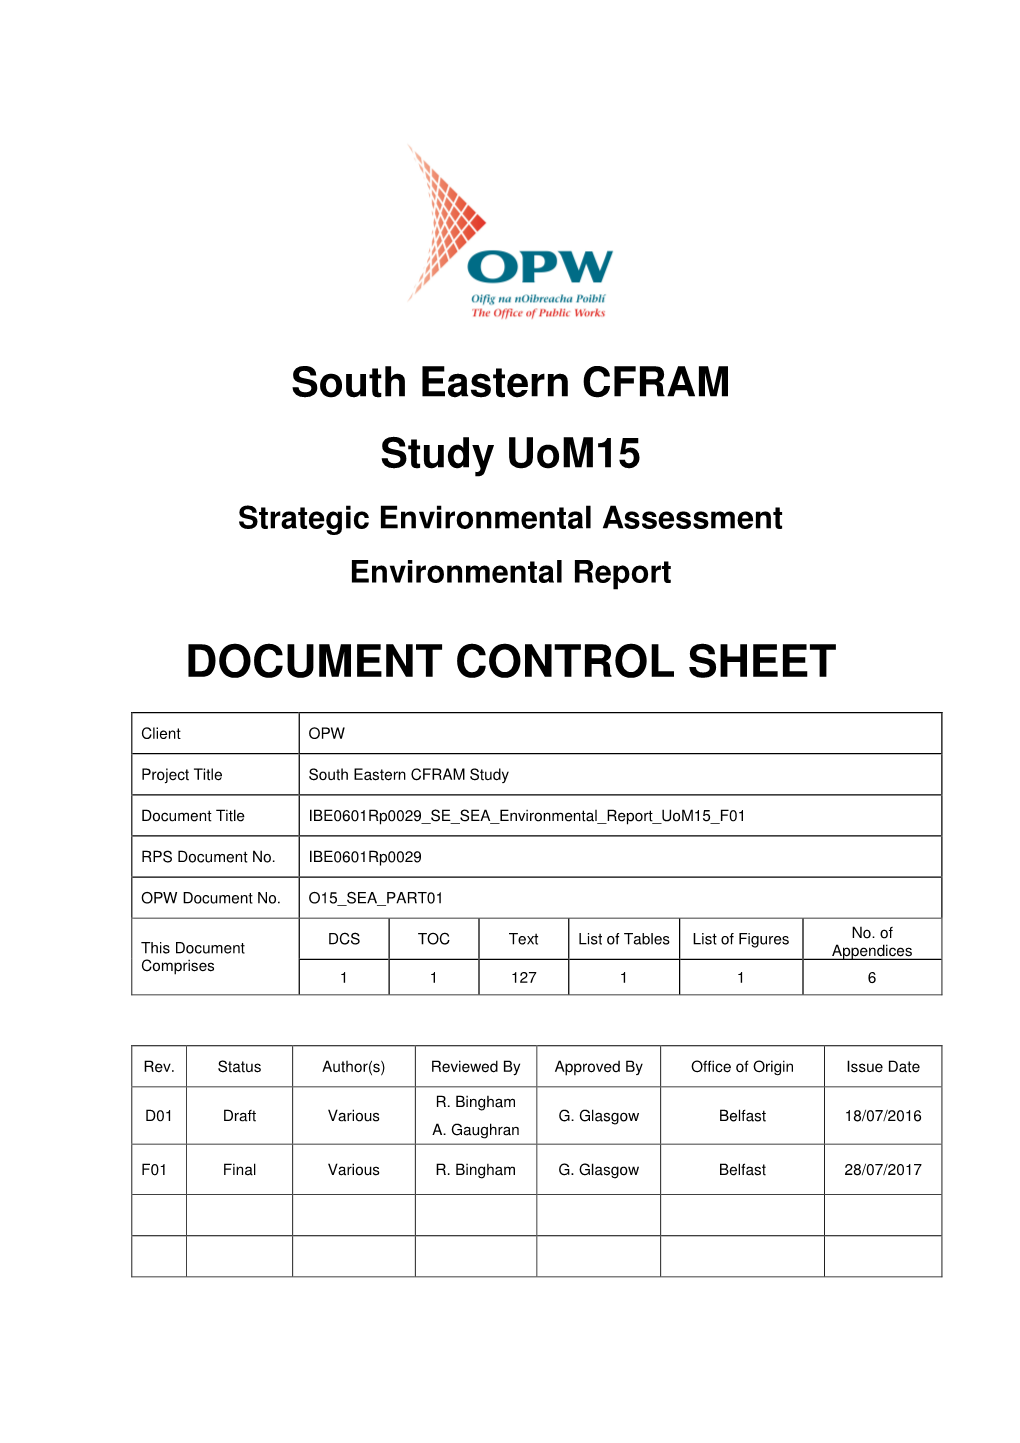 Document Control Sheet